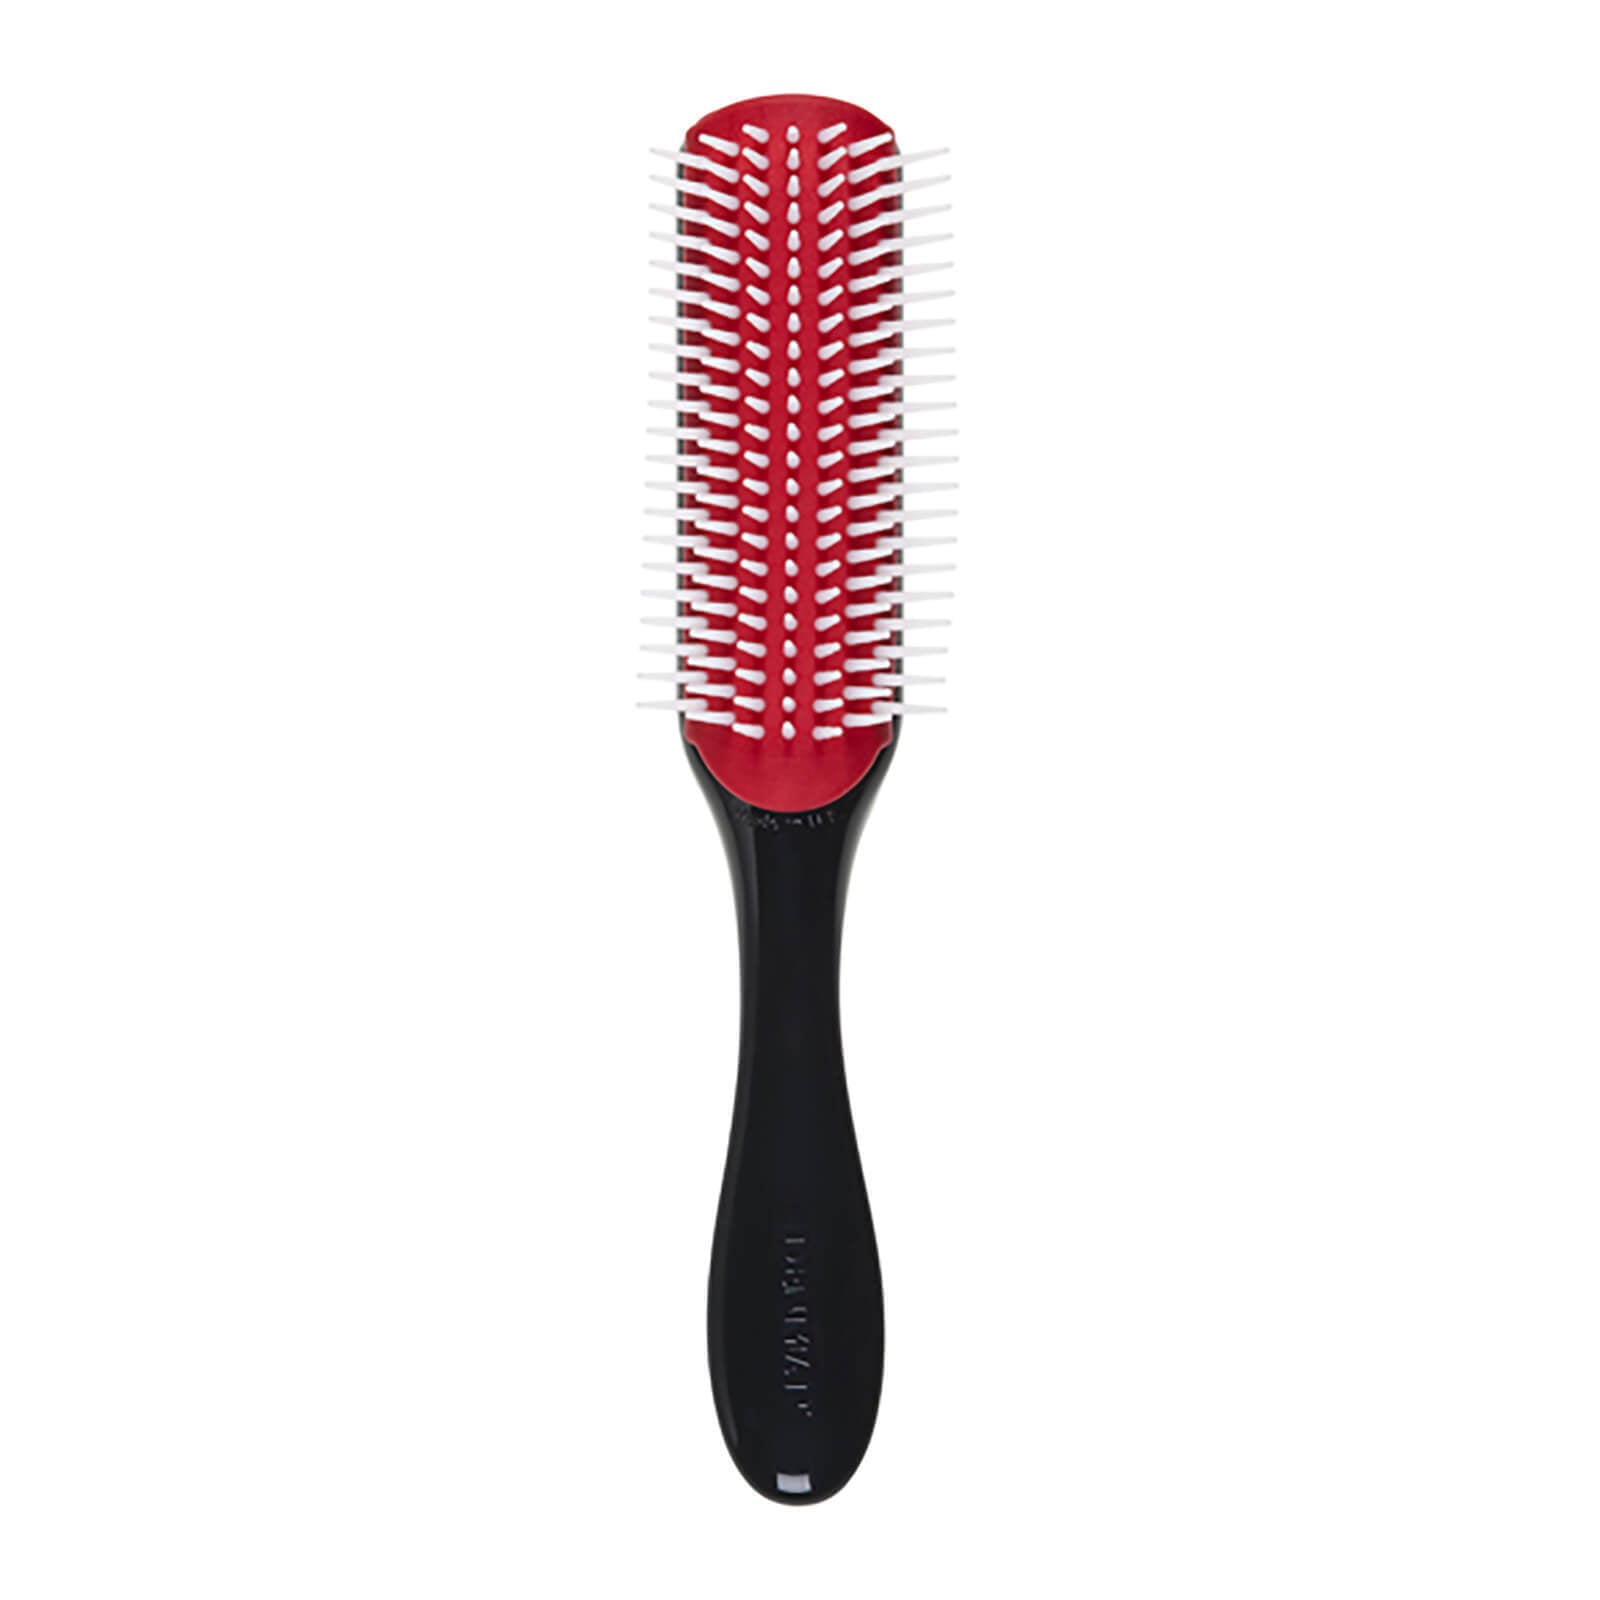 ''Denman Curly Hair Brush D3 (Black & Red) 7 Row Styling Brush for Detangling, Separating, Shapin